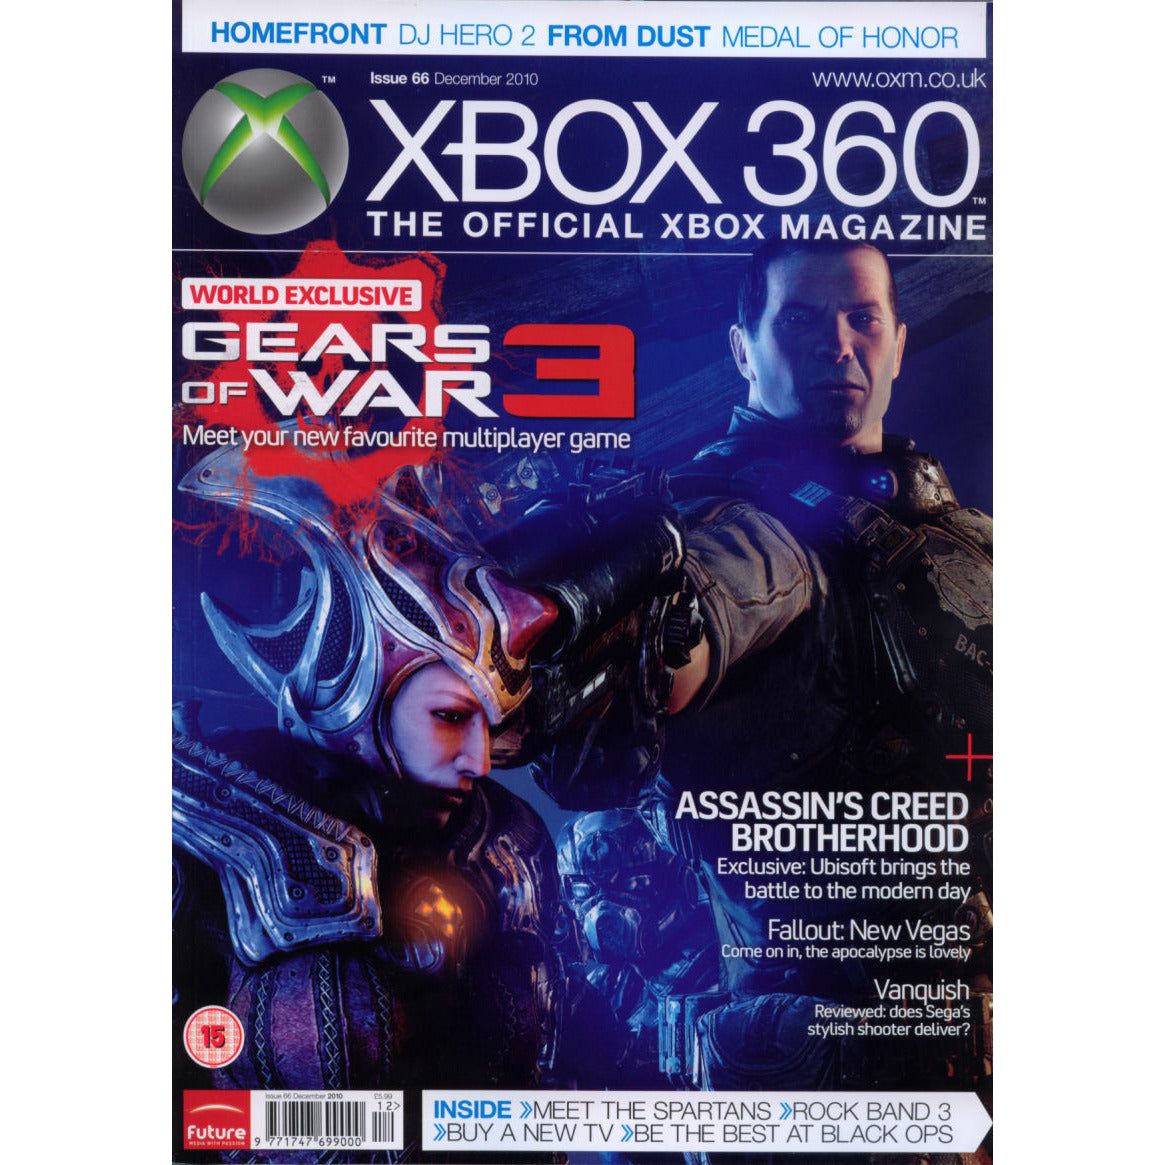 Official Xbox Magazine - Gears of War 3 - December 2010